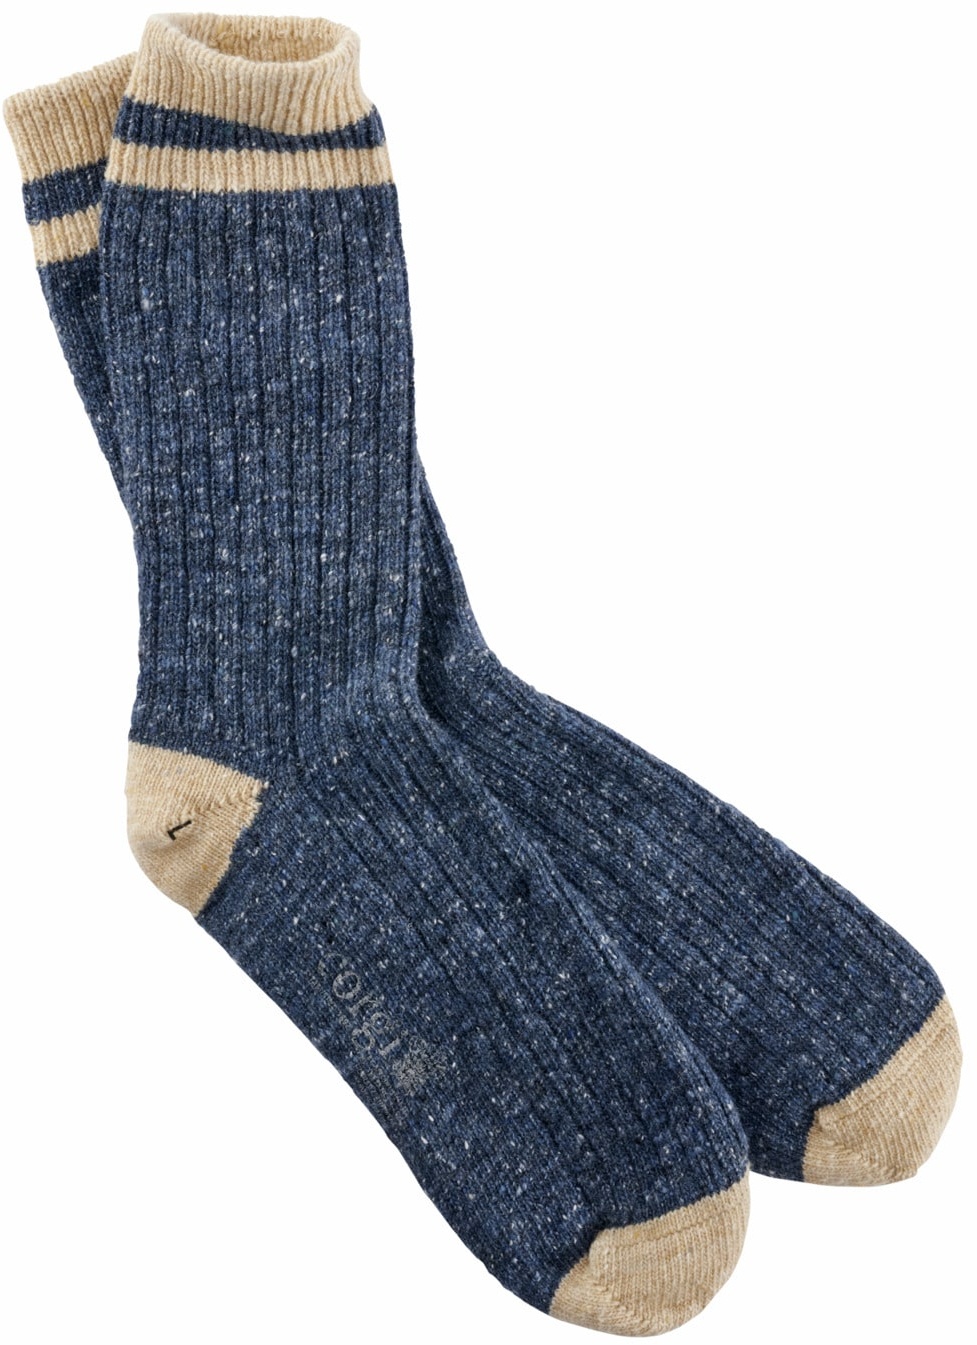 Corgi Herren Socken Blau gemustert - 42-43